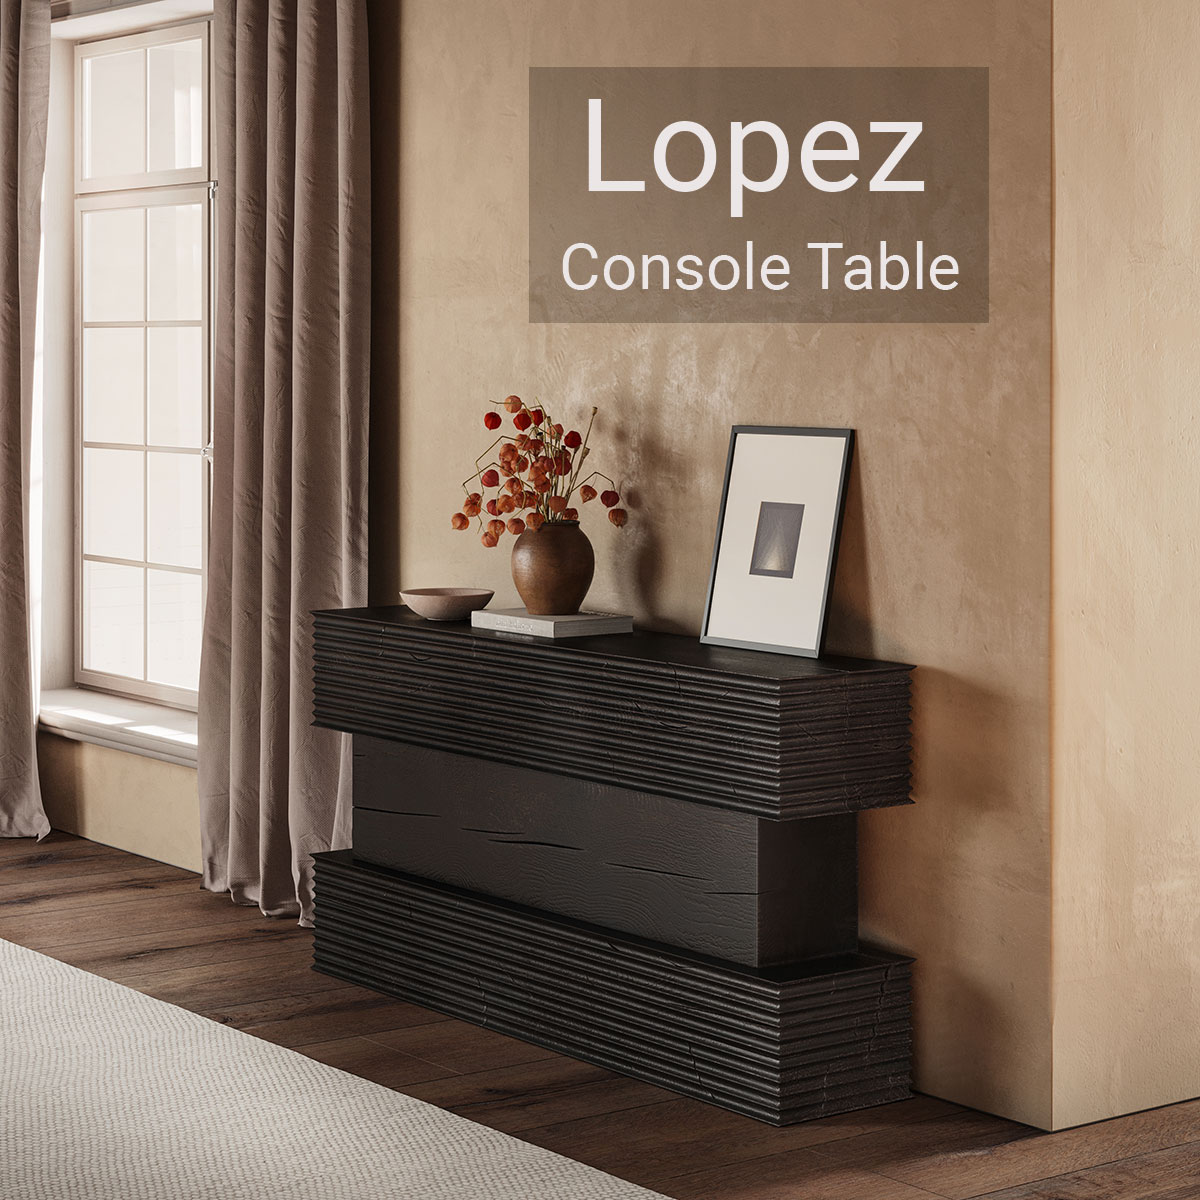 Lopez Console Table